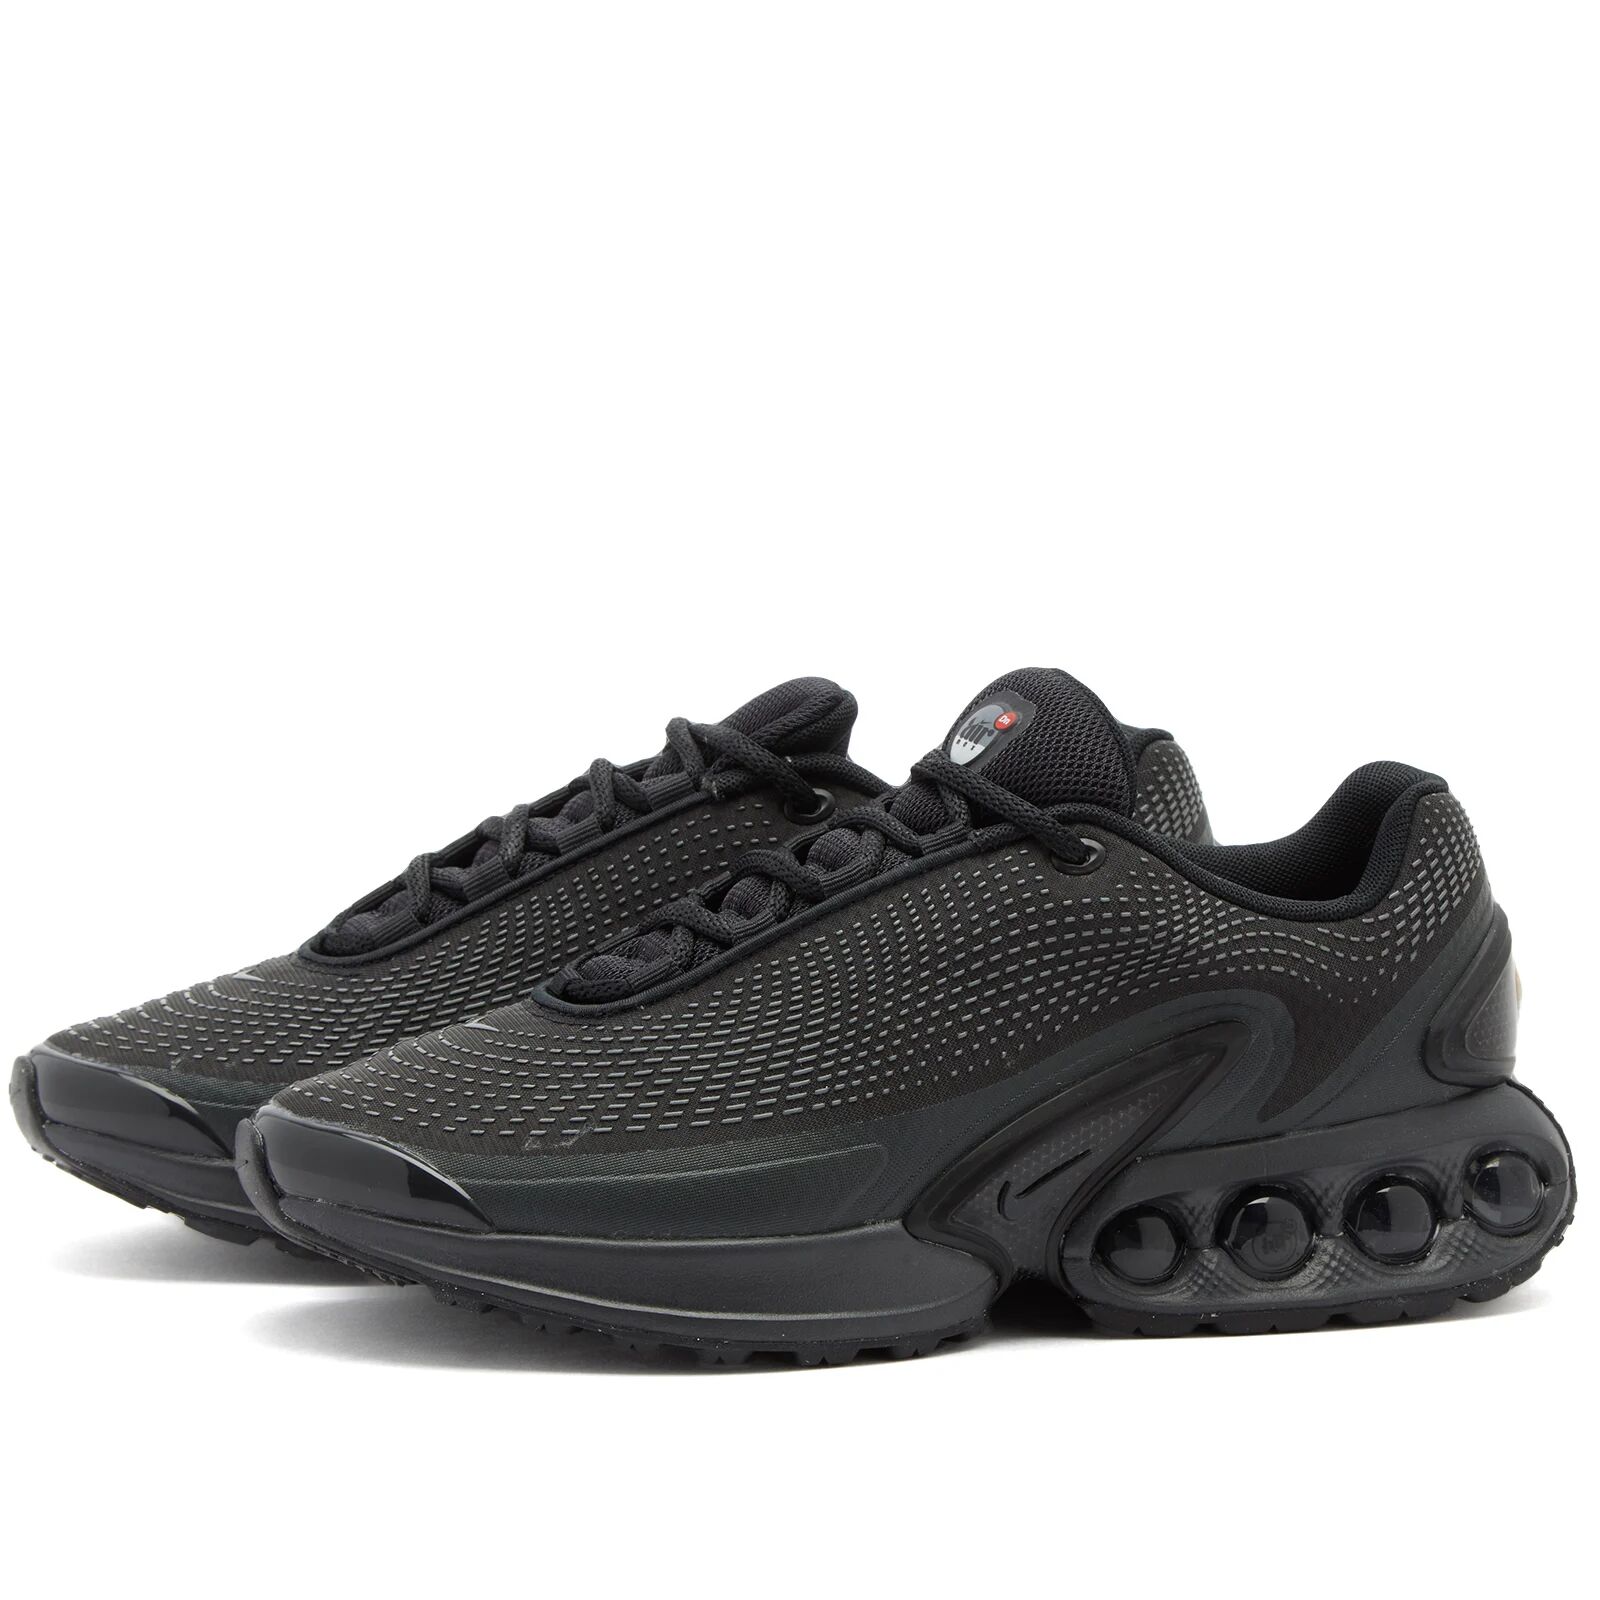 Nike Air Max DN Sneakers in Black/Grey, Size UK 10.5